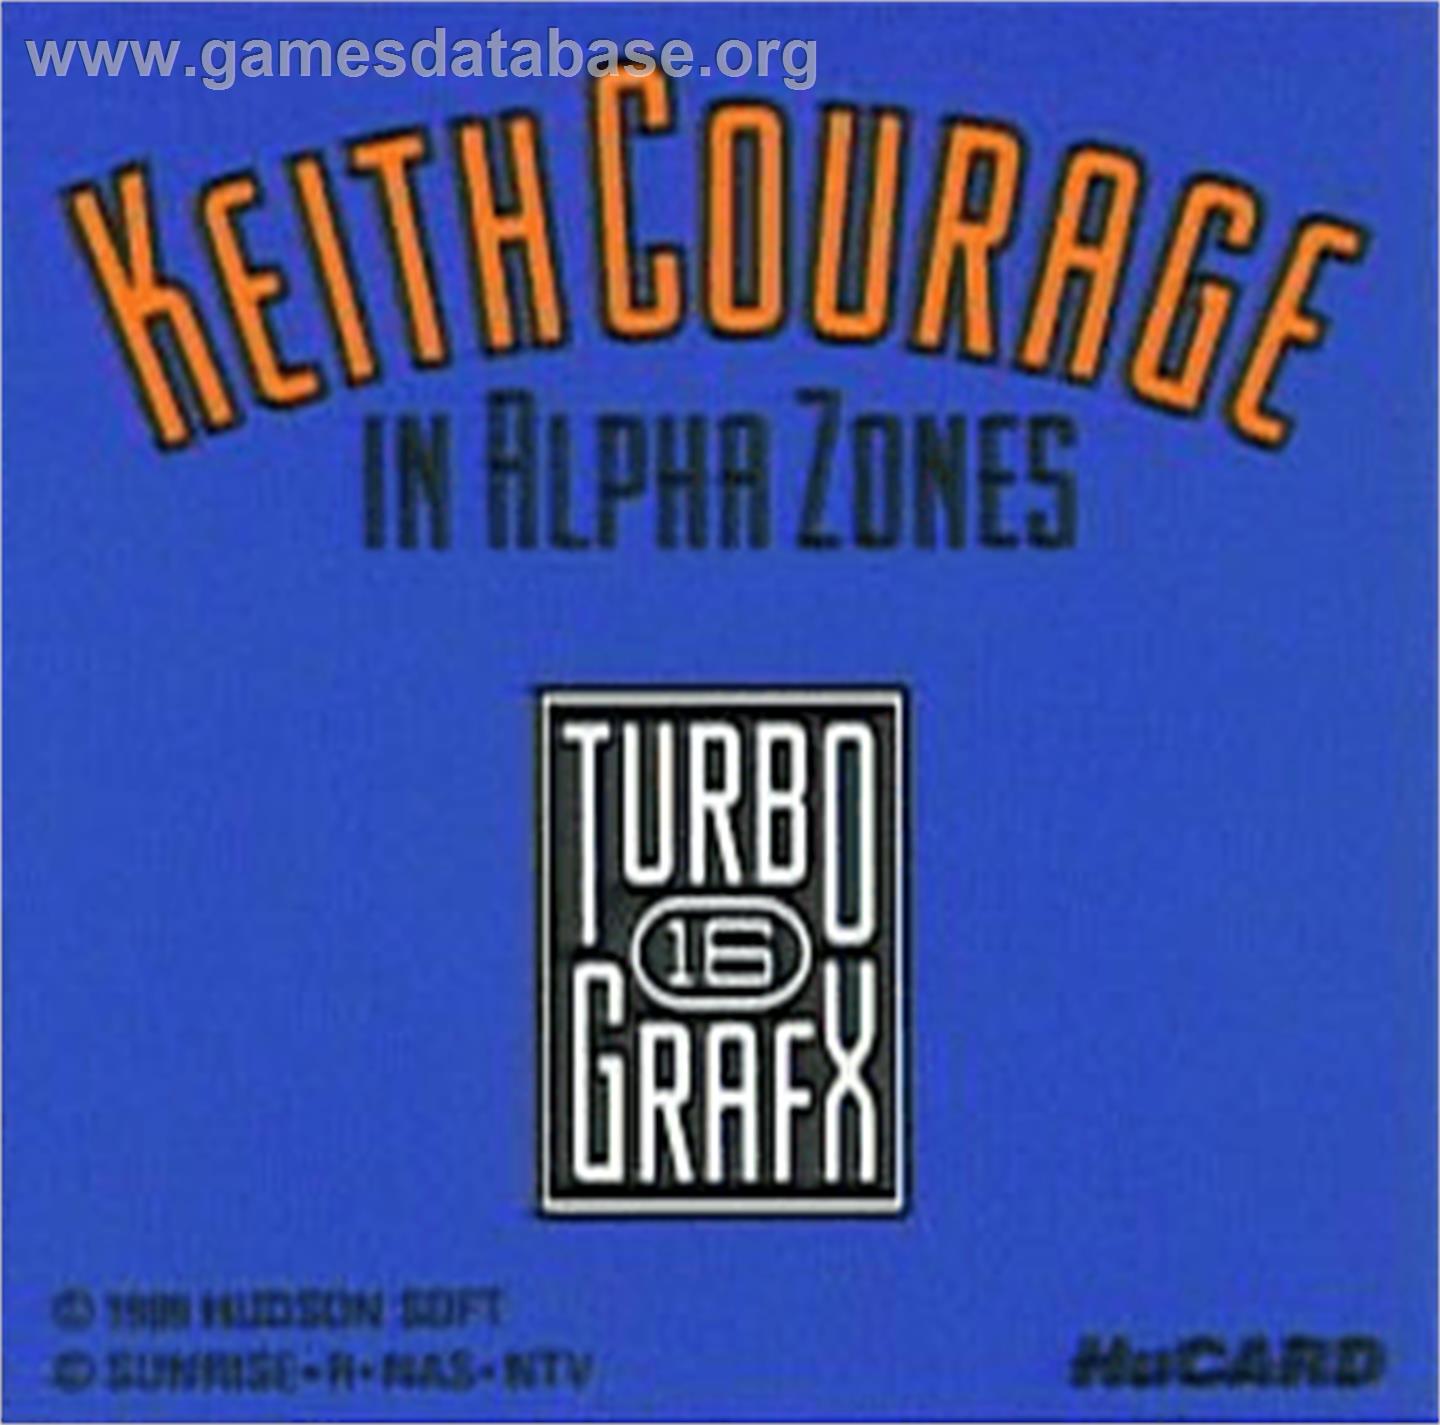 Keith Courage in Alpha Zones - NEC TurboGrafx-16 - Artwork - Cartridge Top